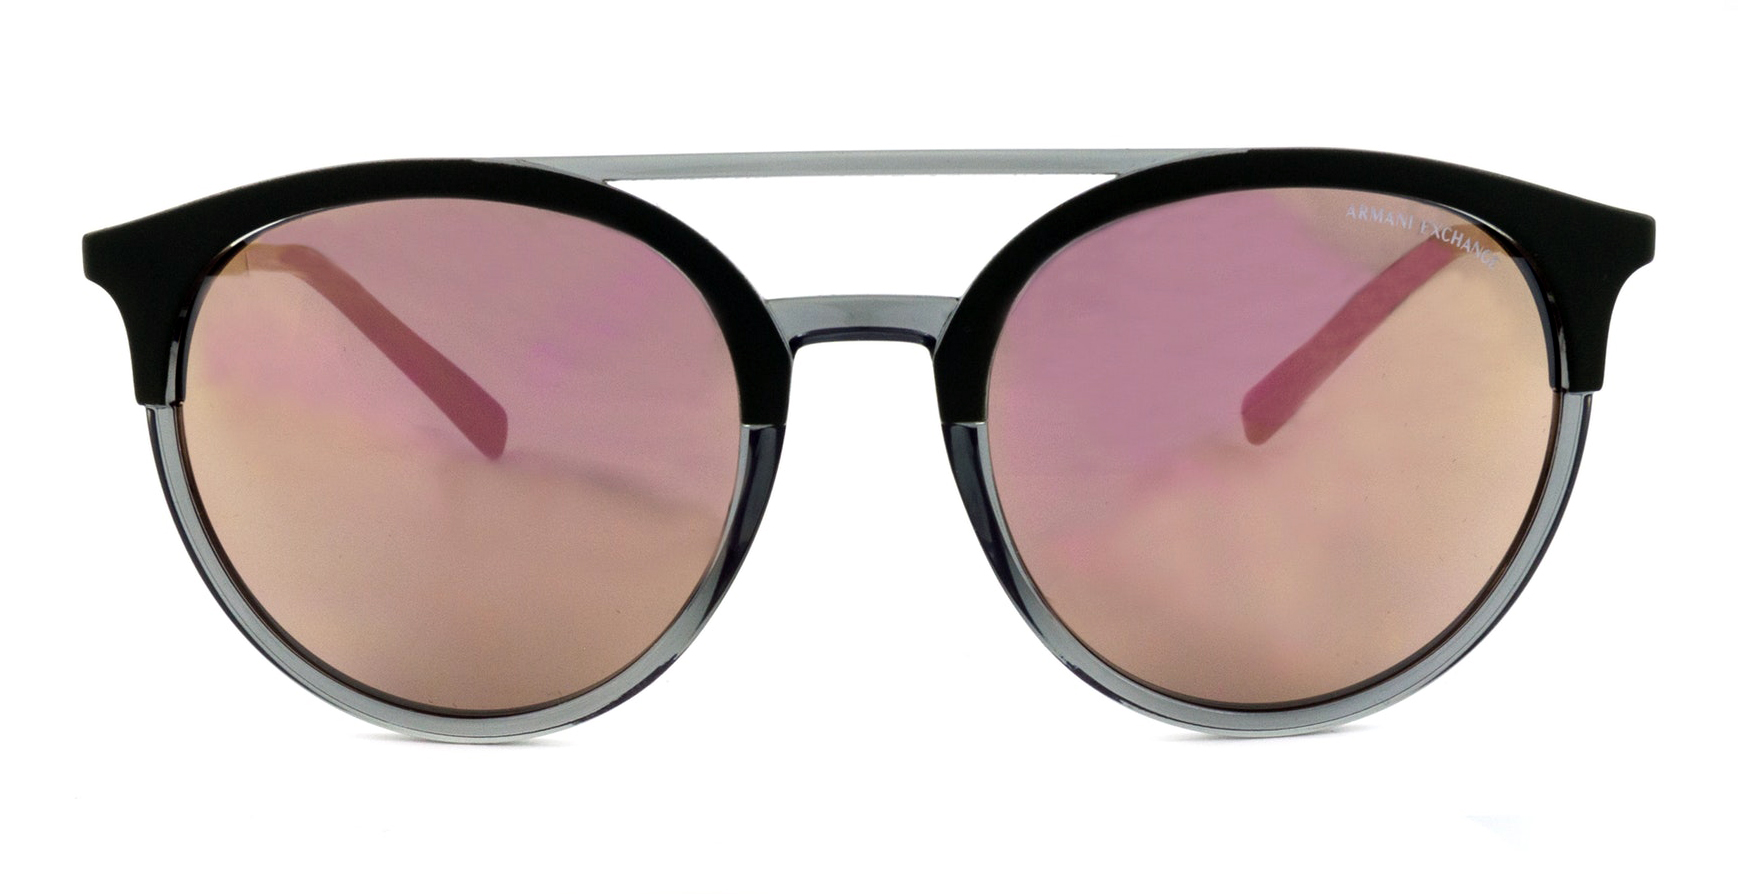 armani exchange glasses pink